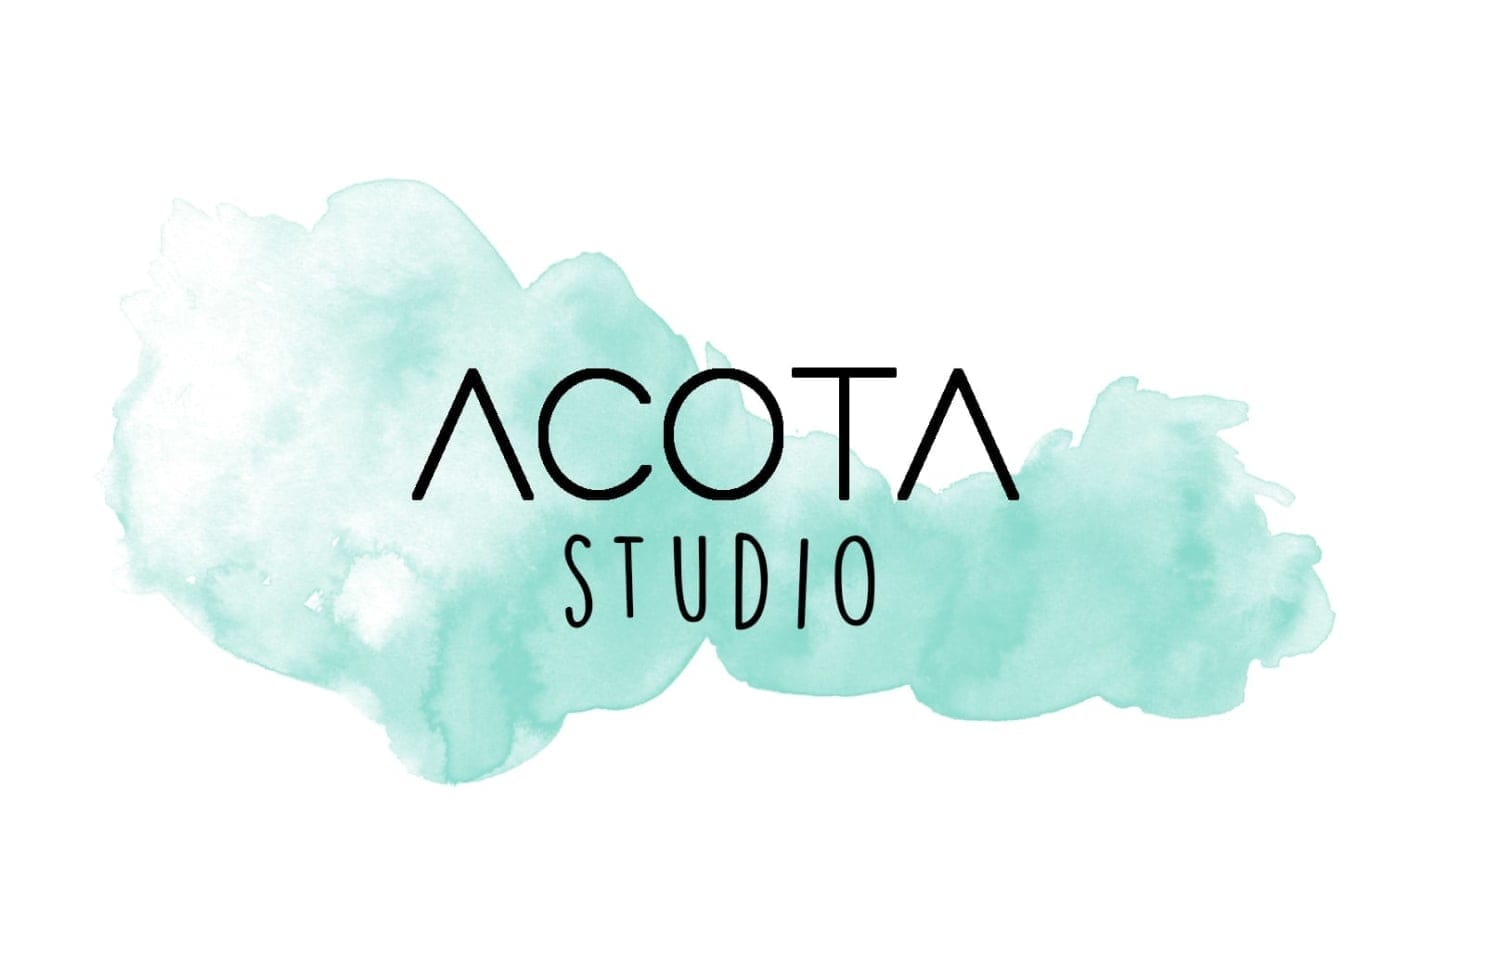 Acota Studio